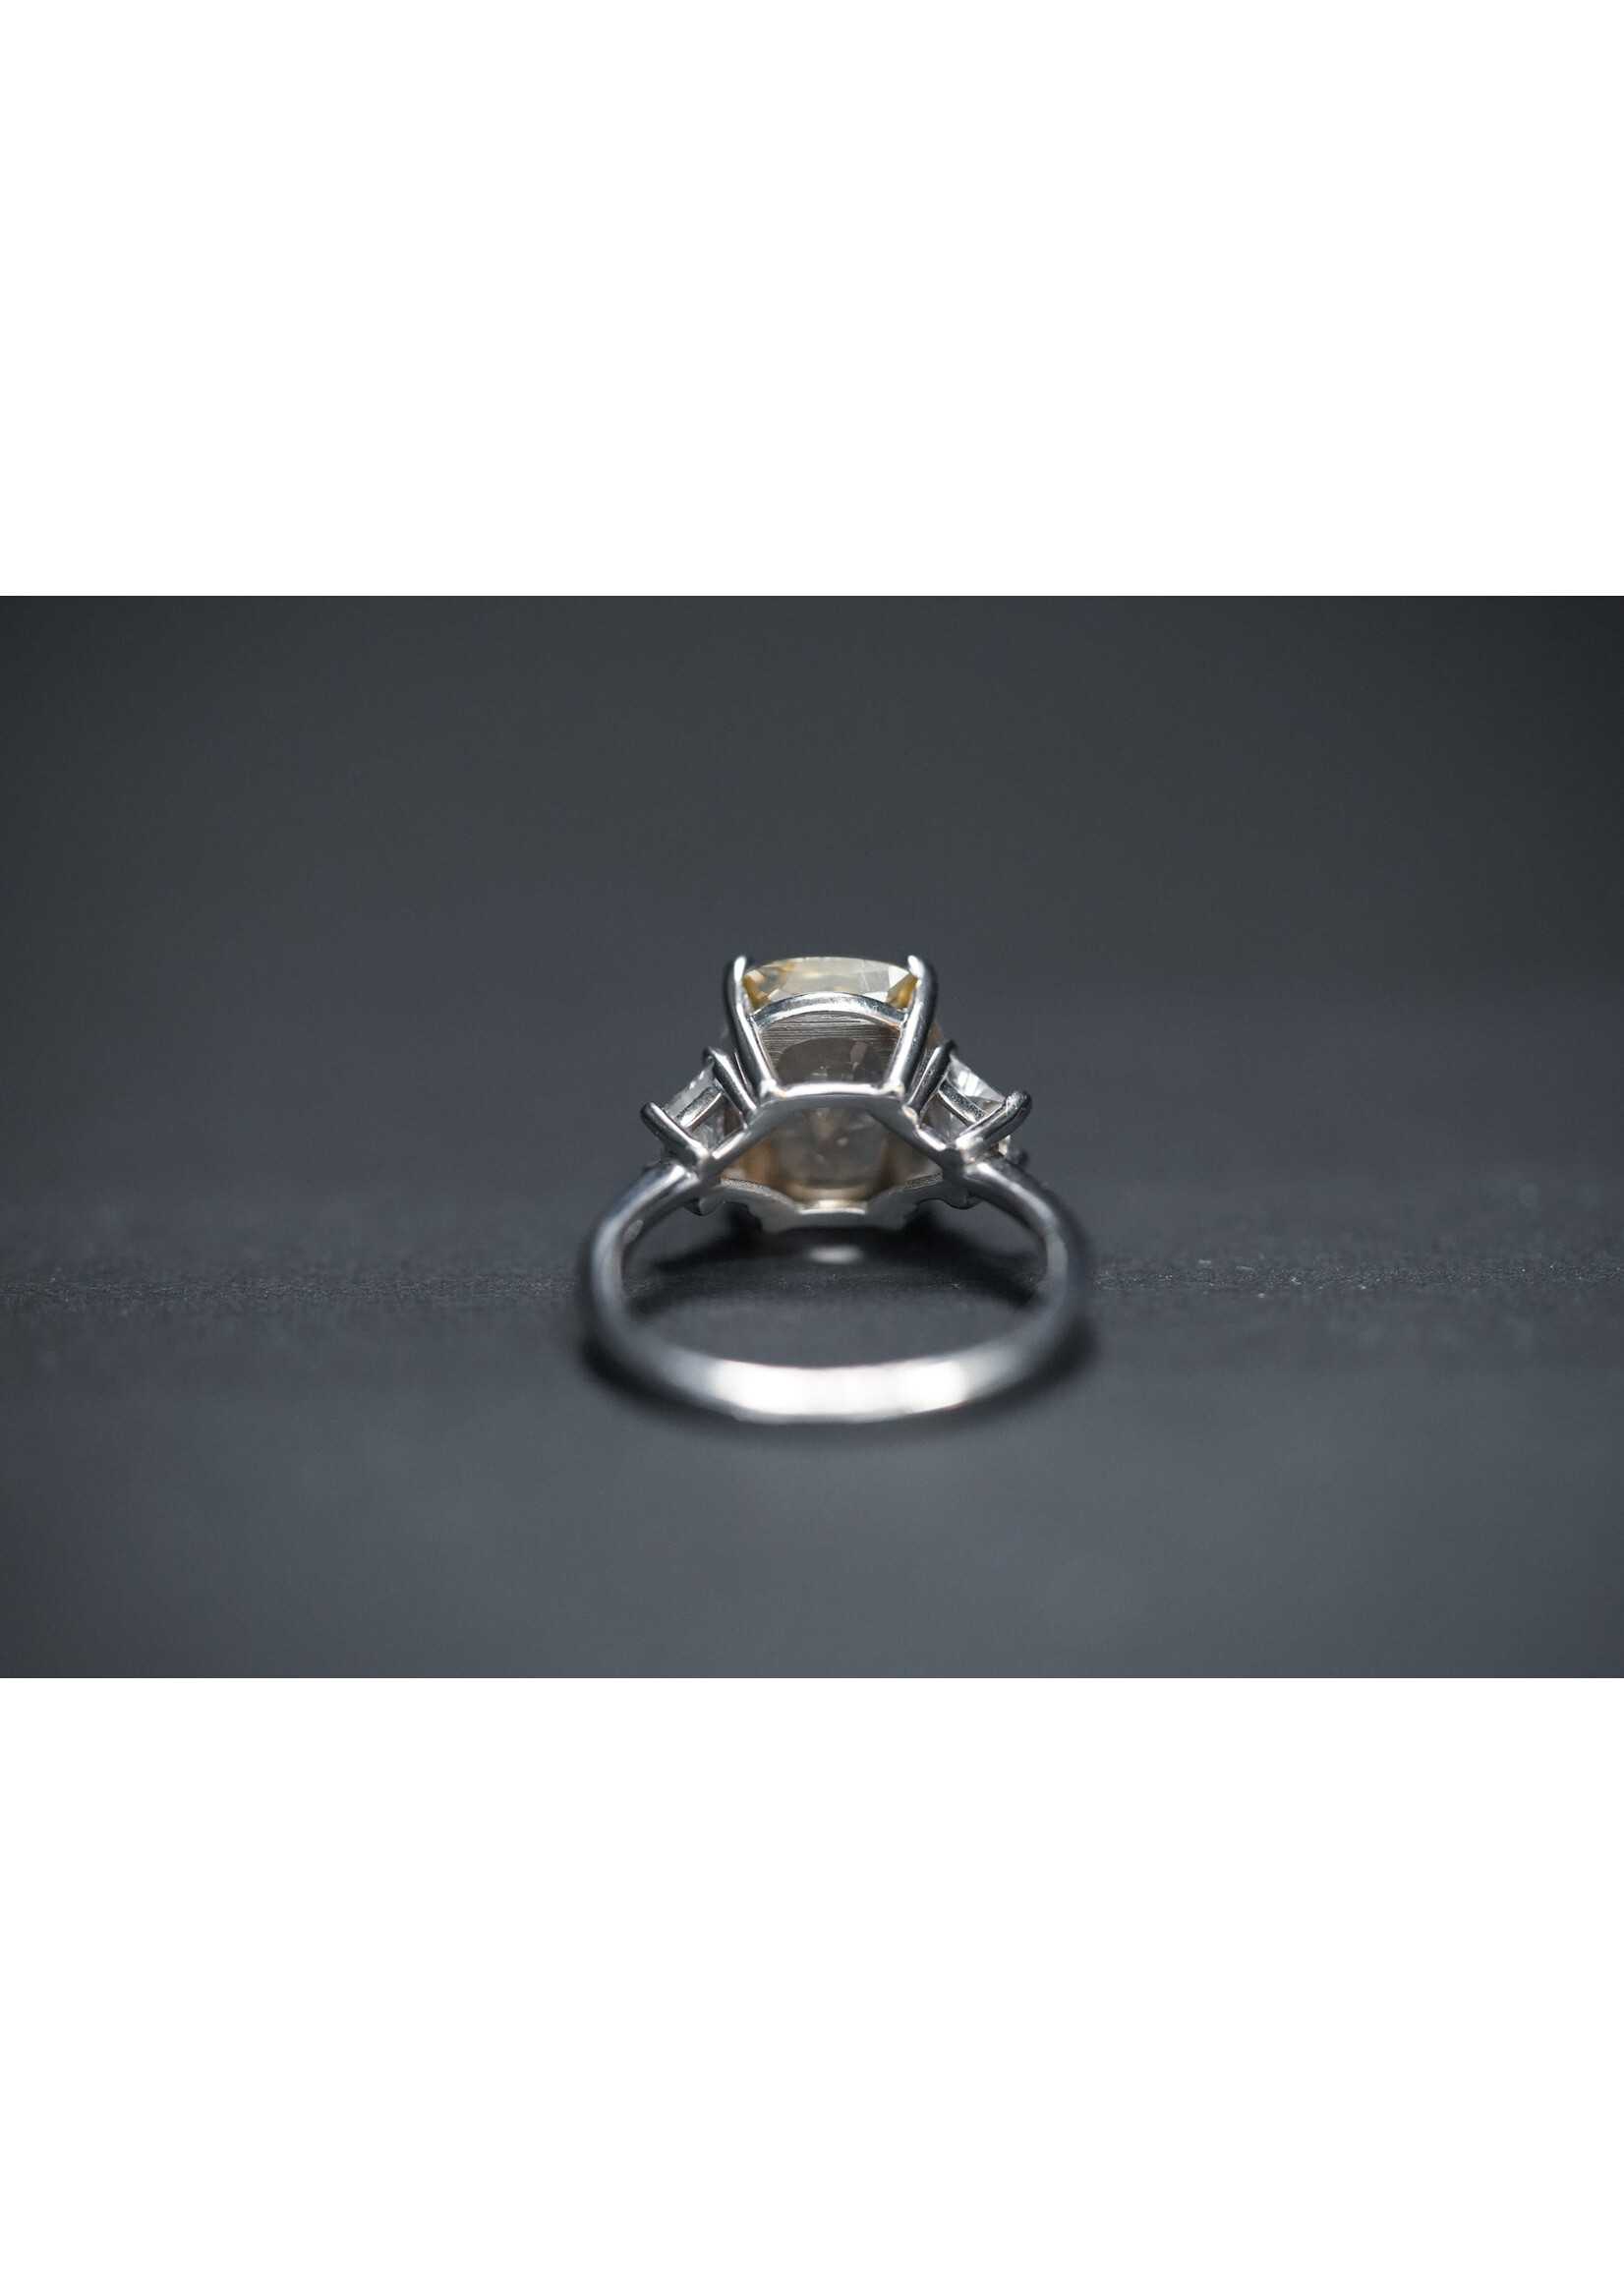 14KW 3.77g 6.22ctw (5.70ctr) Sapphire & Diamond Fashion Ring (size 6)